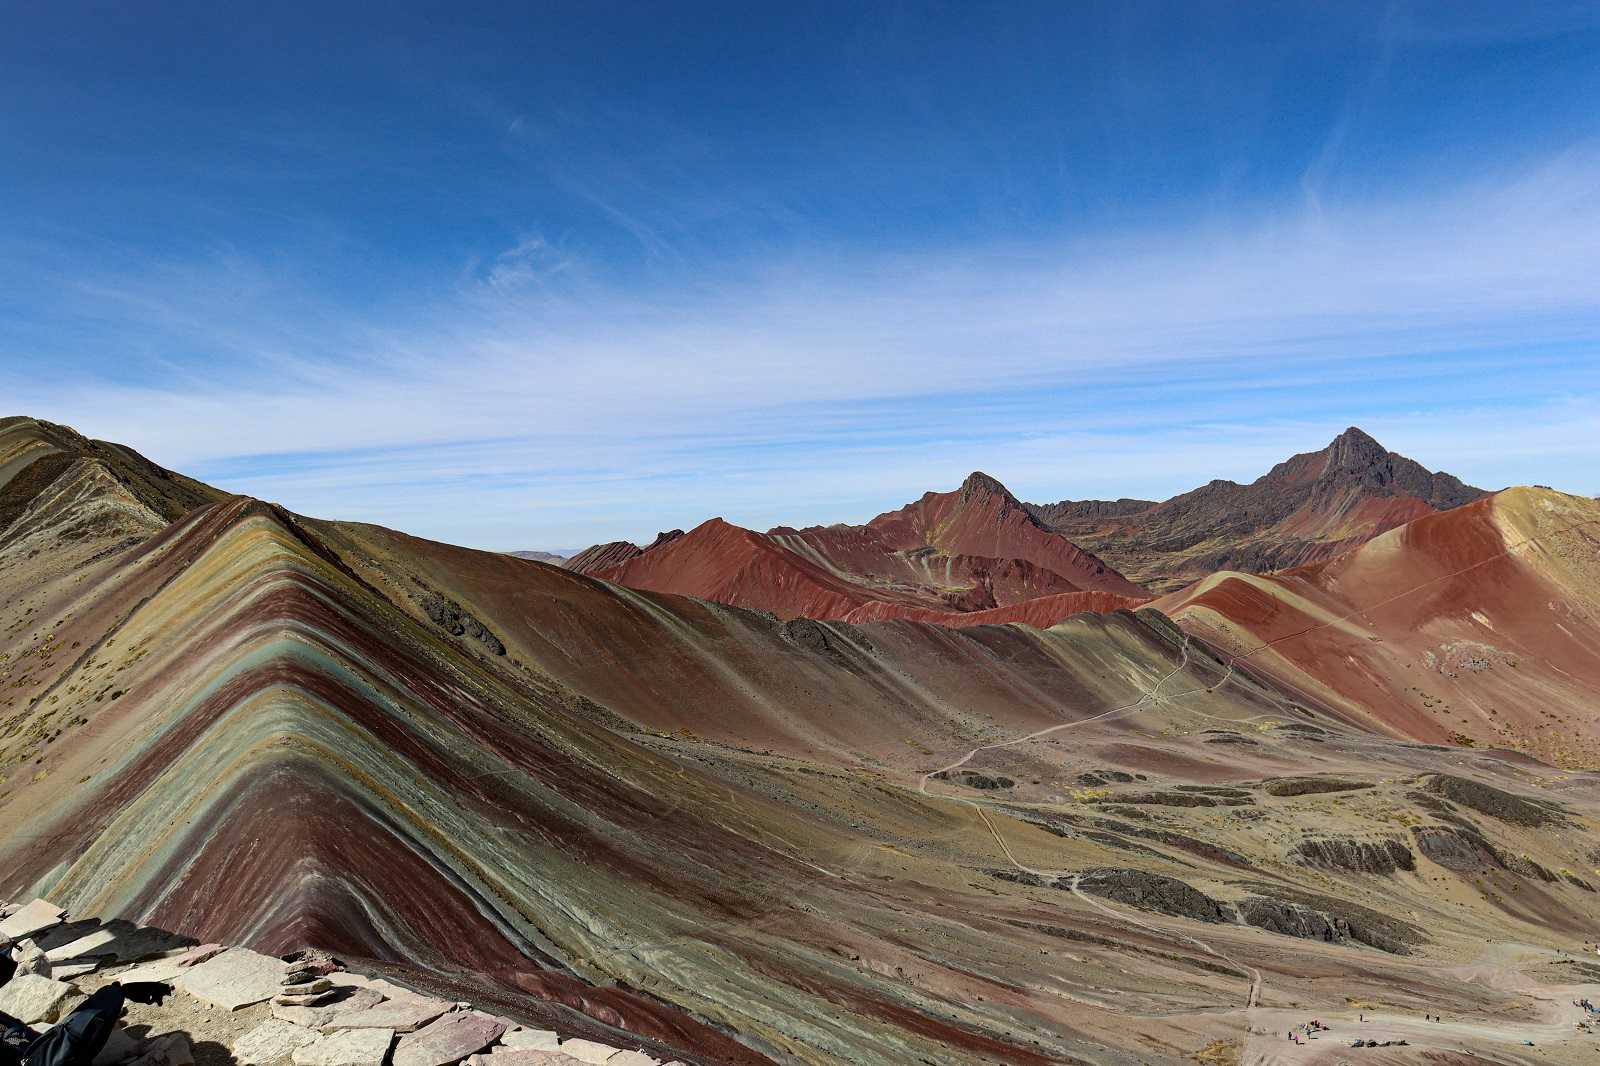 The great Rainbow Mountain in Peru seen on the Ausangate trek